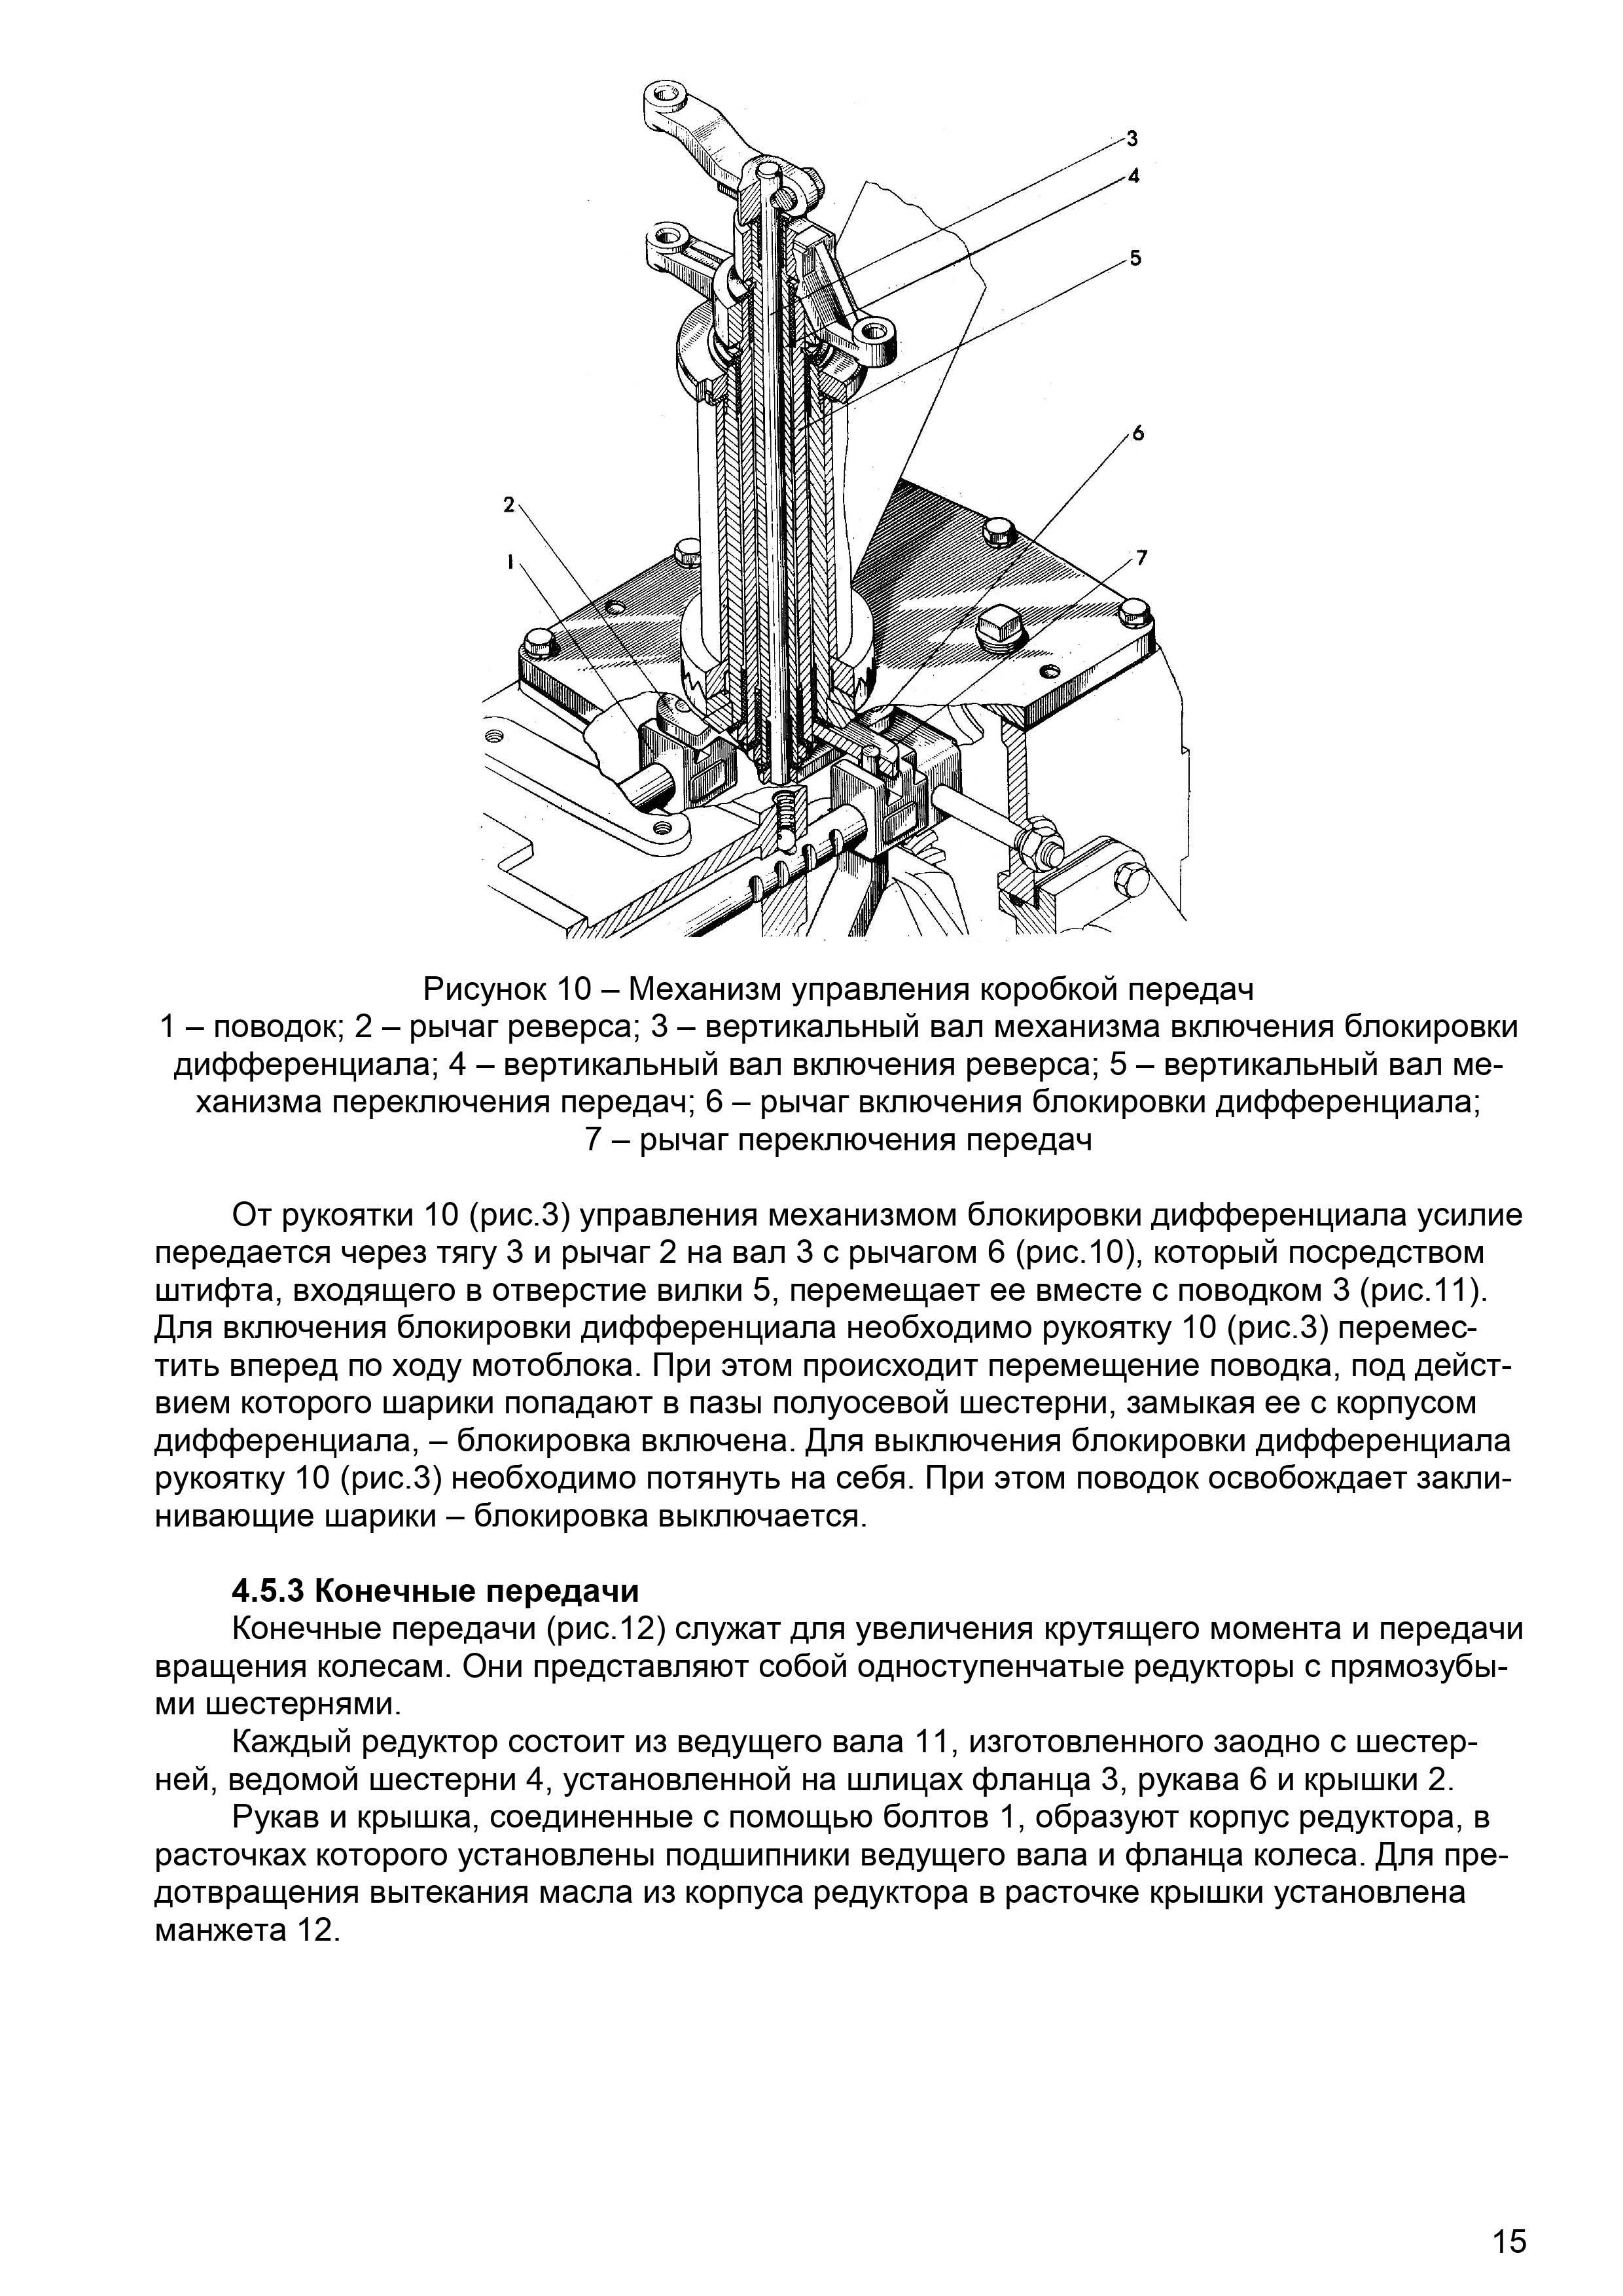 belarus_09h_manual i catalog (1)_page-0015